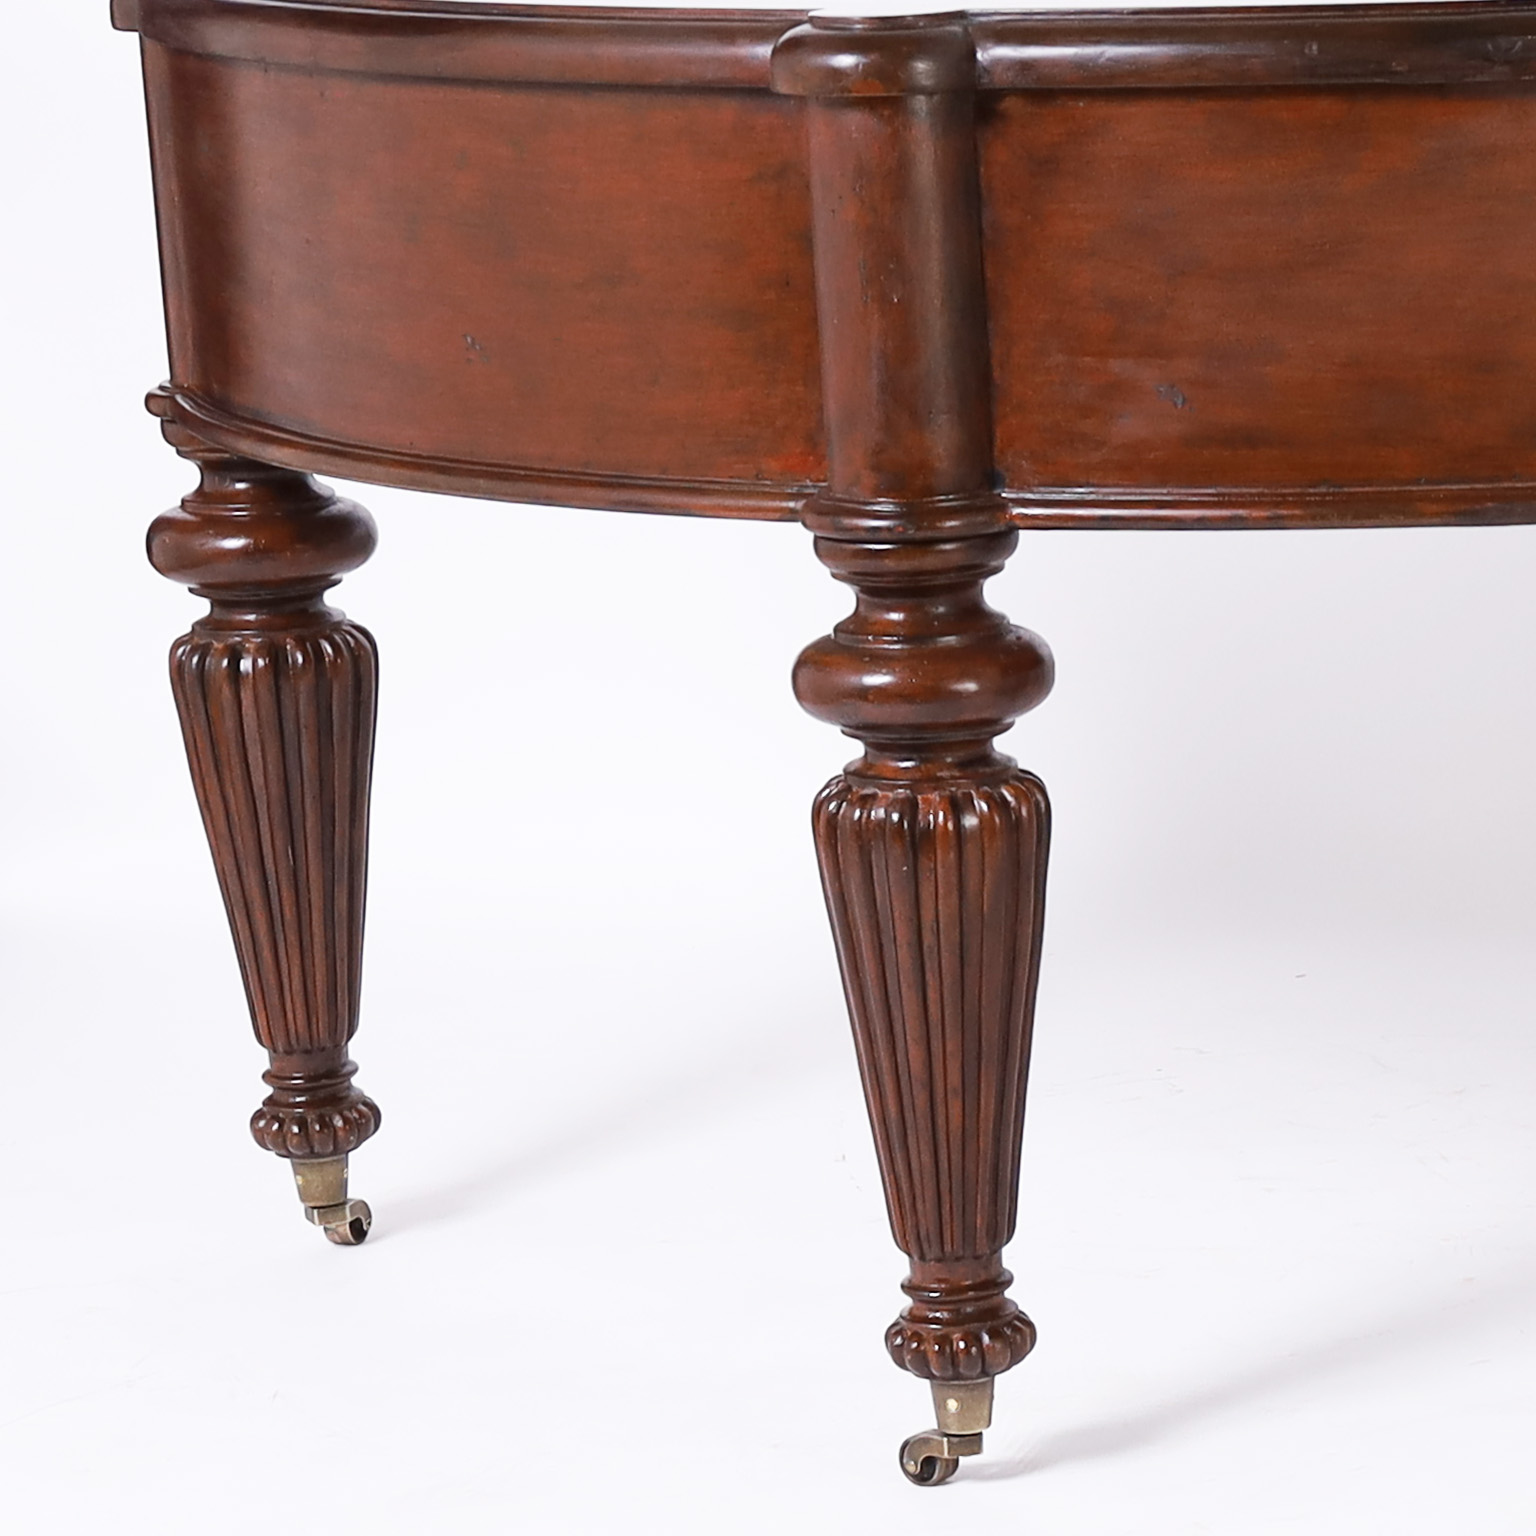 British Colonial Style Demi-Lune Leather Top Desk